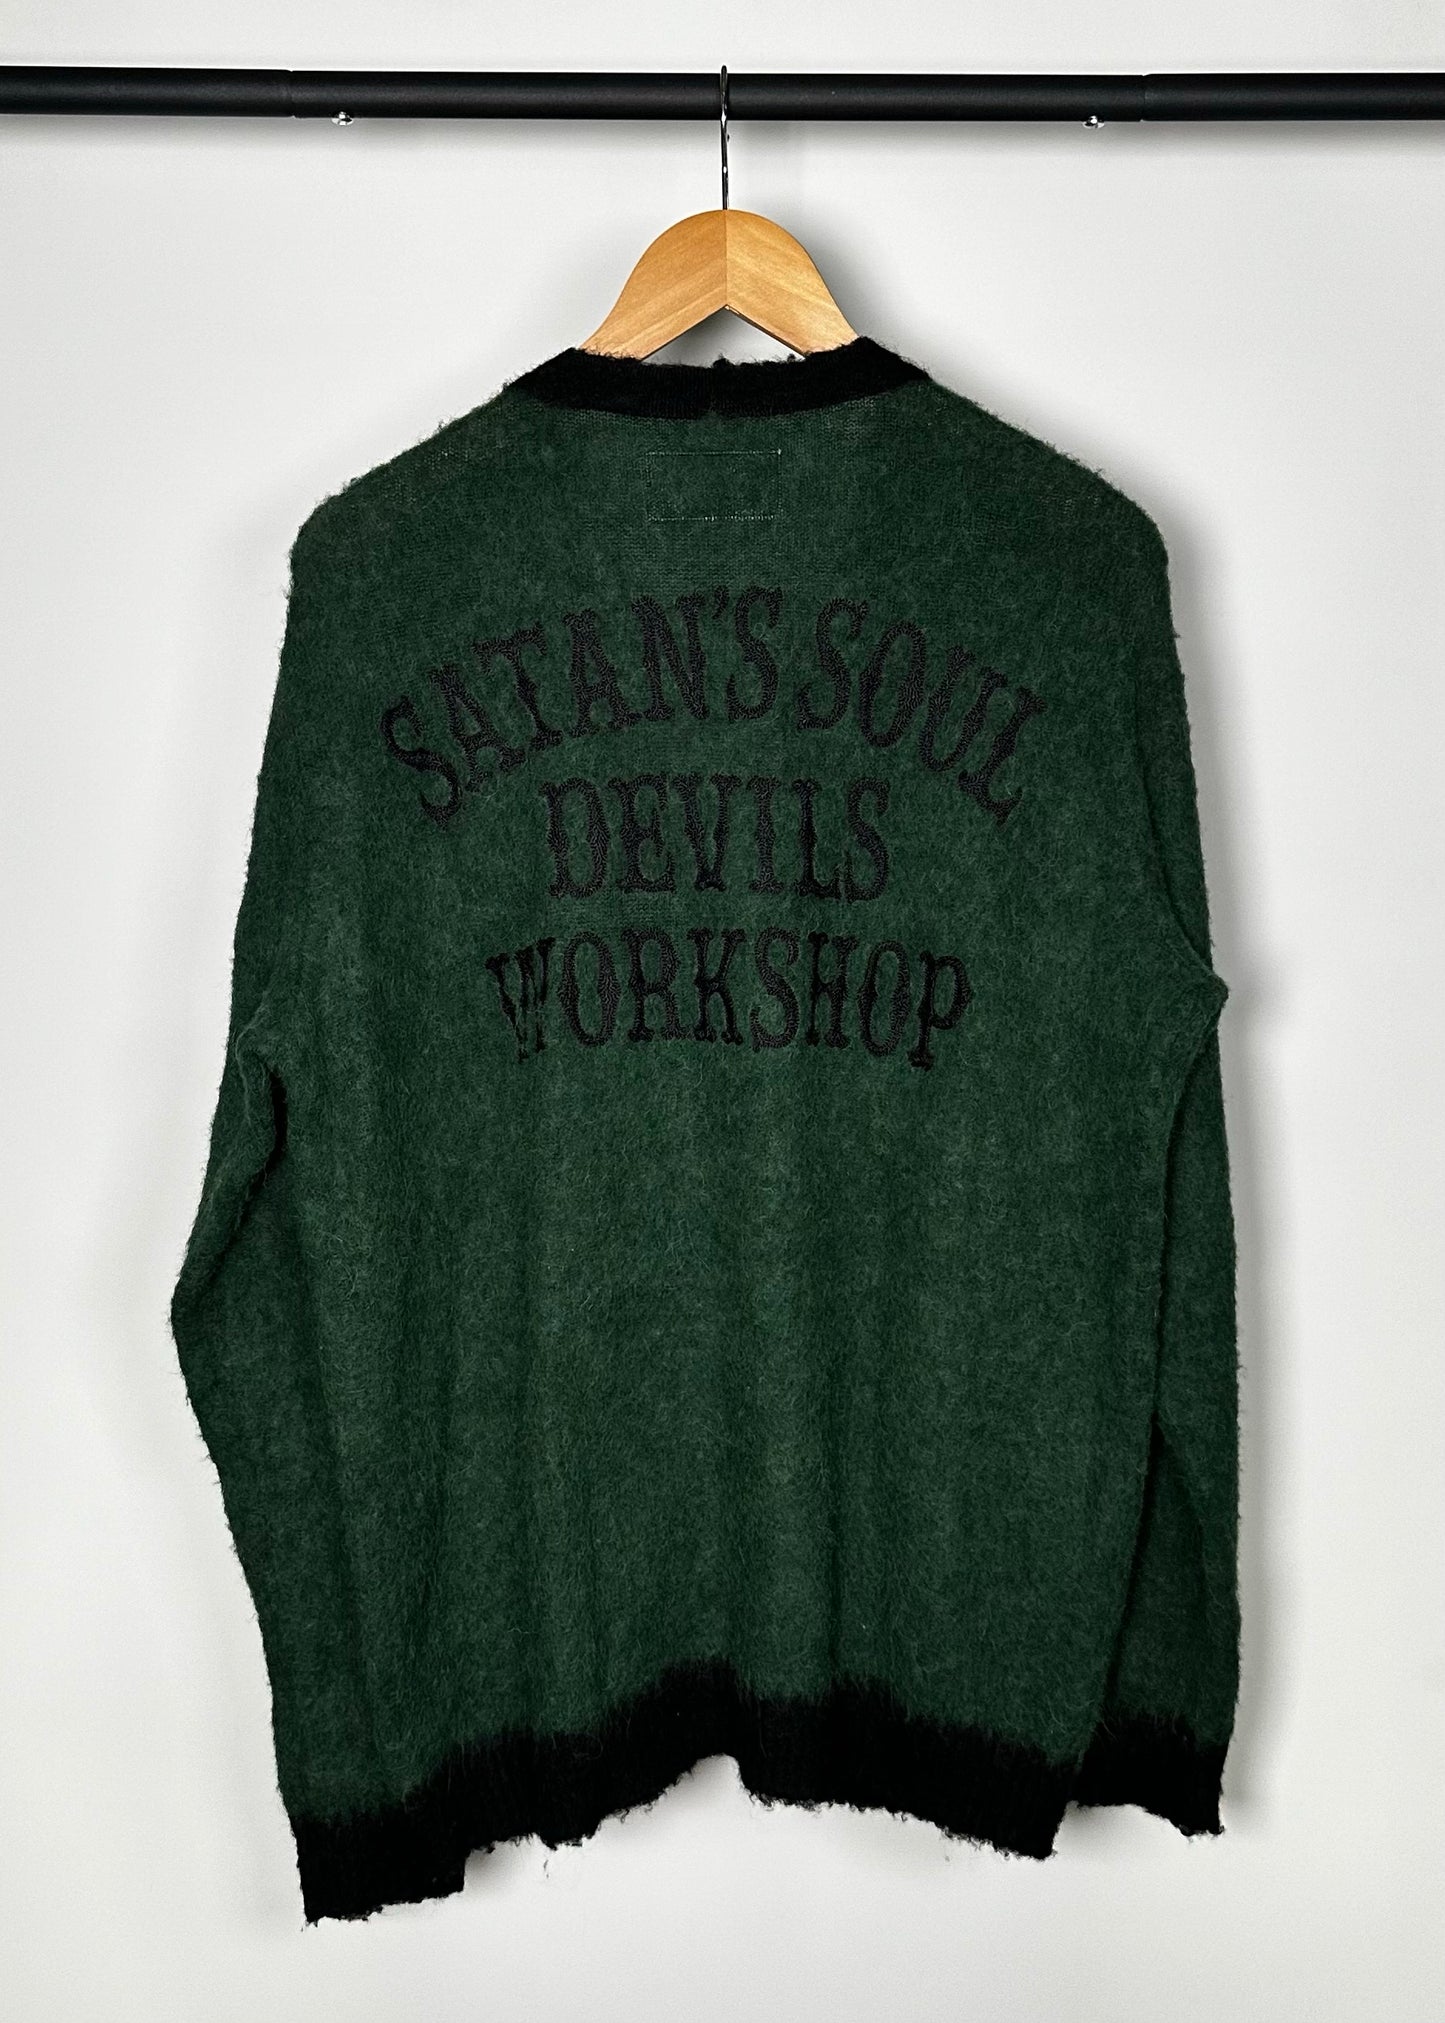 Guilty Parties Satan's Soul Devils Workshop Cardigan Sweater